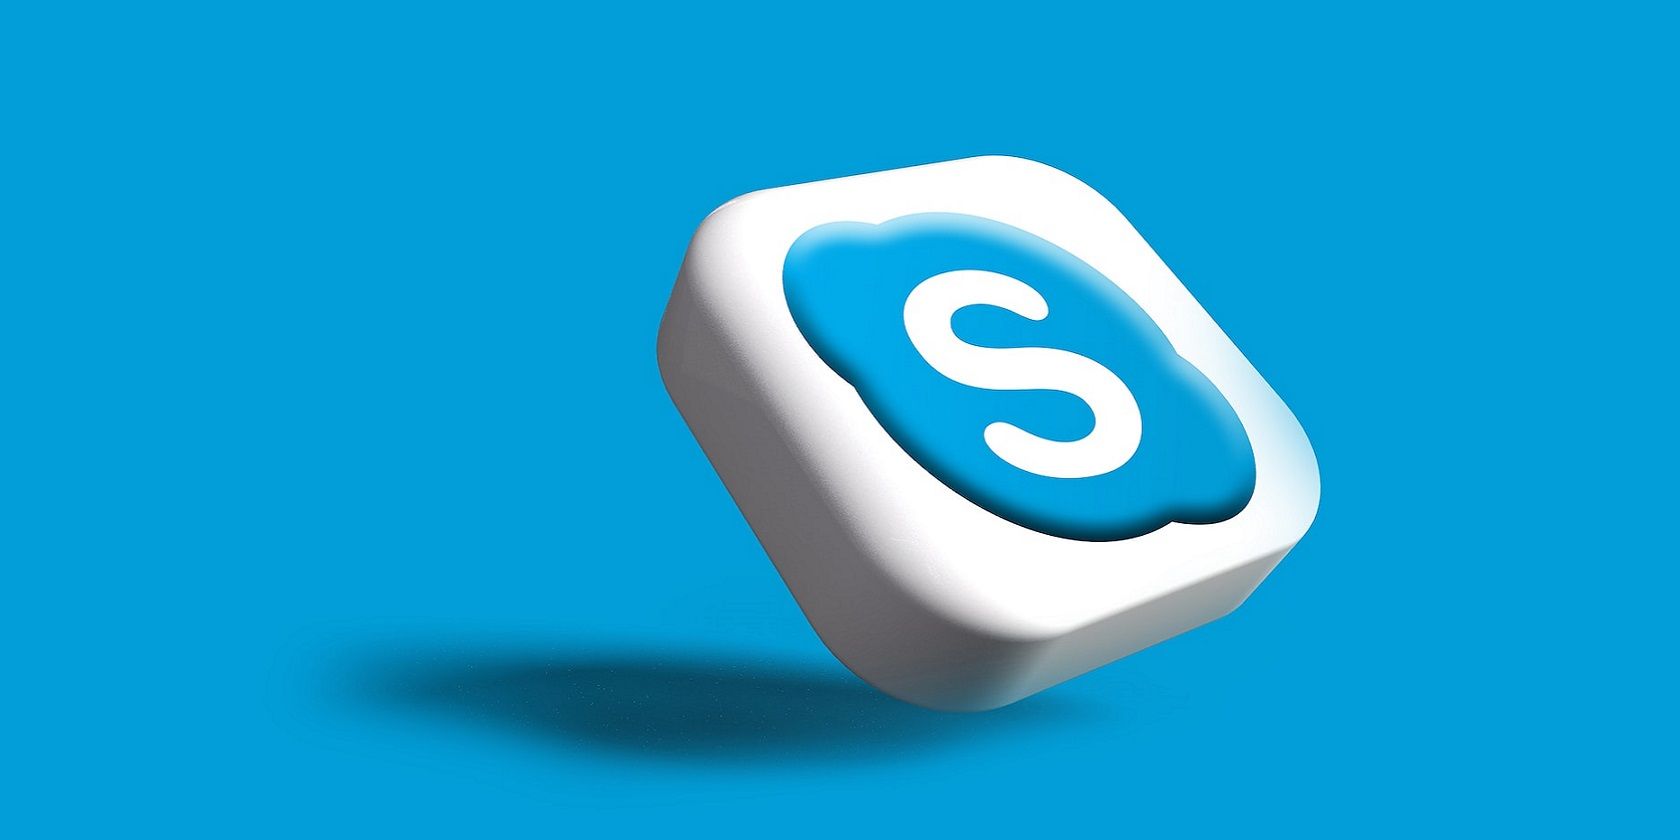 The Skype logo 